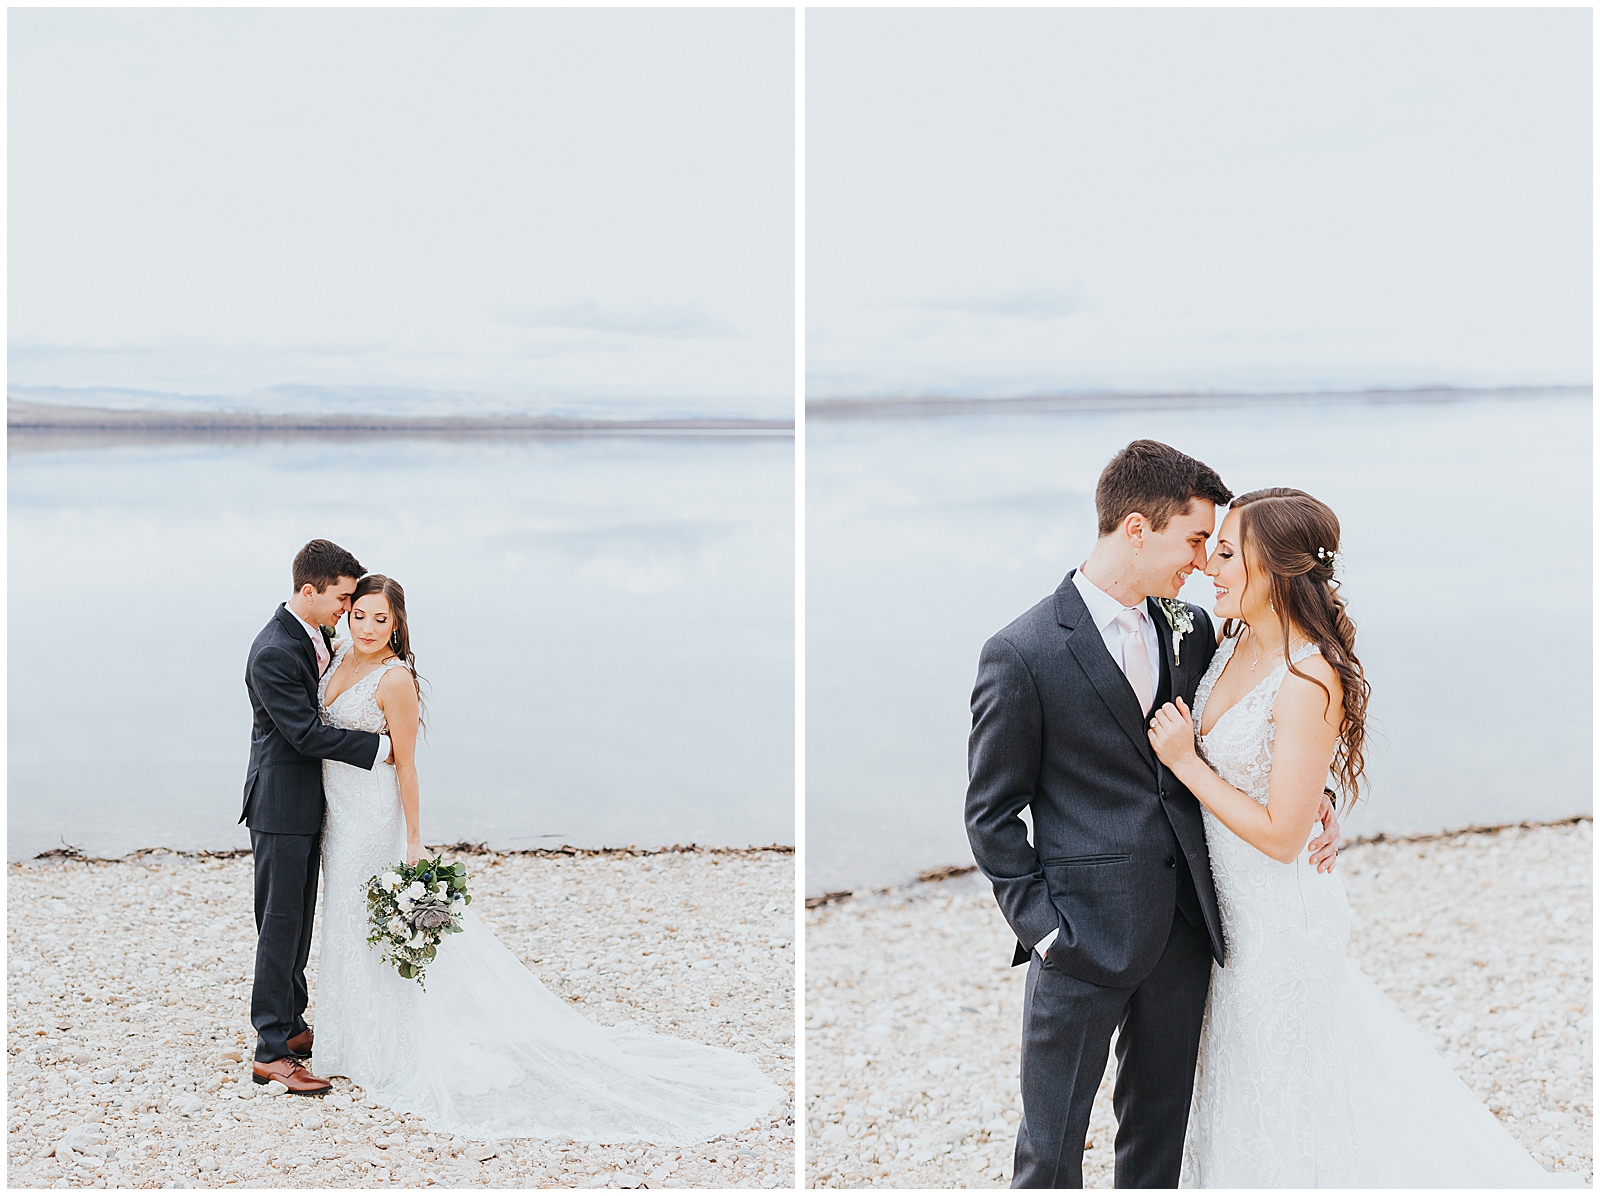 Dusty Blue and Blush Idaho Lake Wedding by Karli Elliott Photography